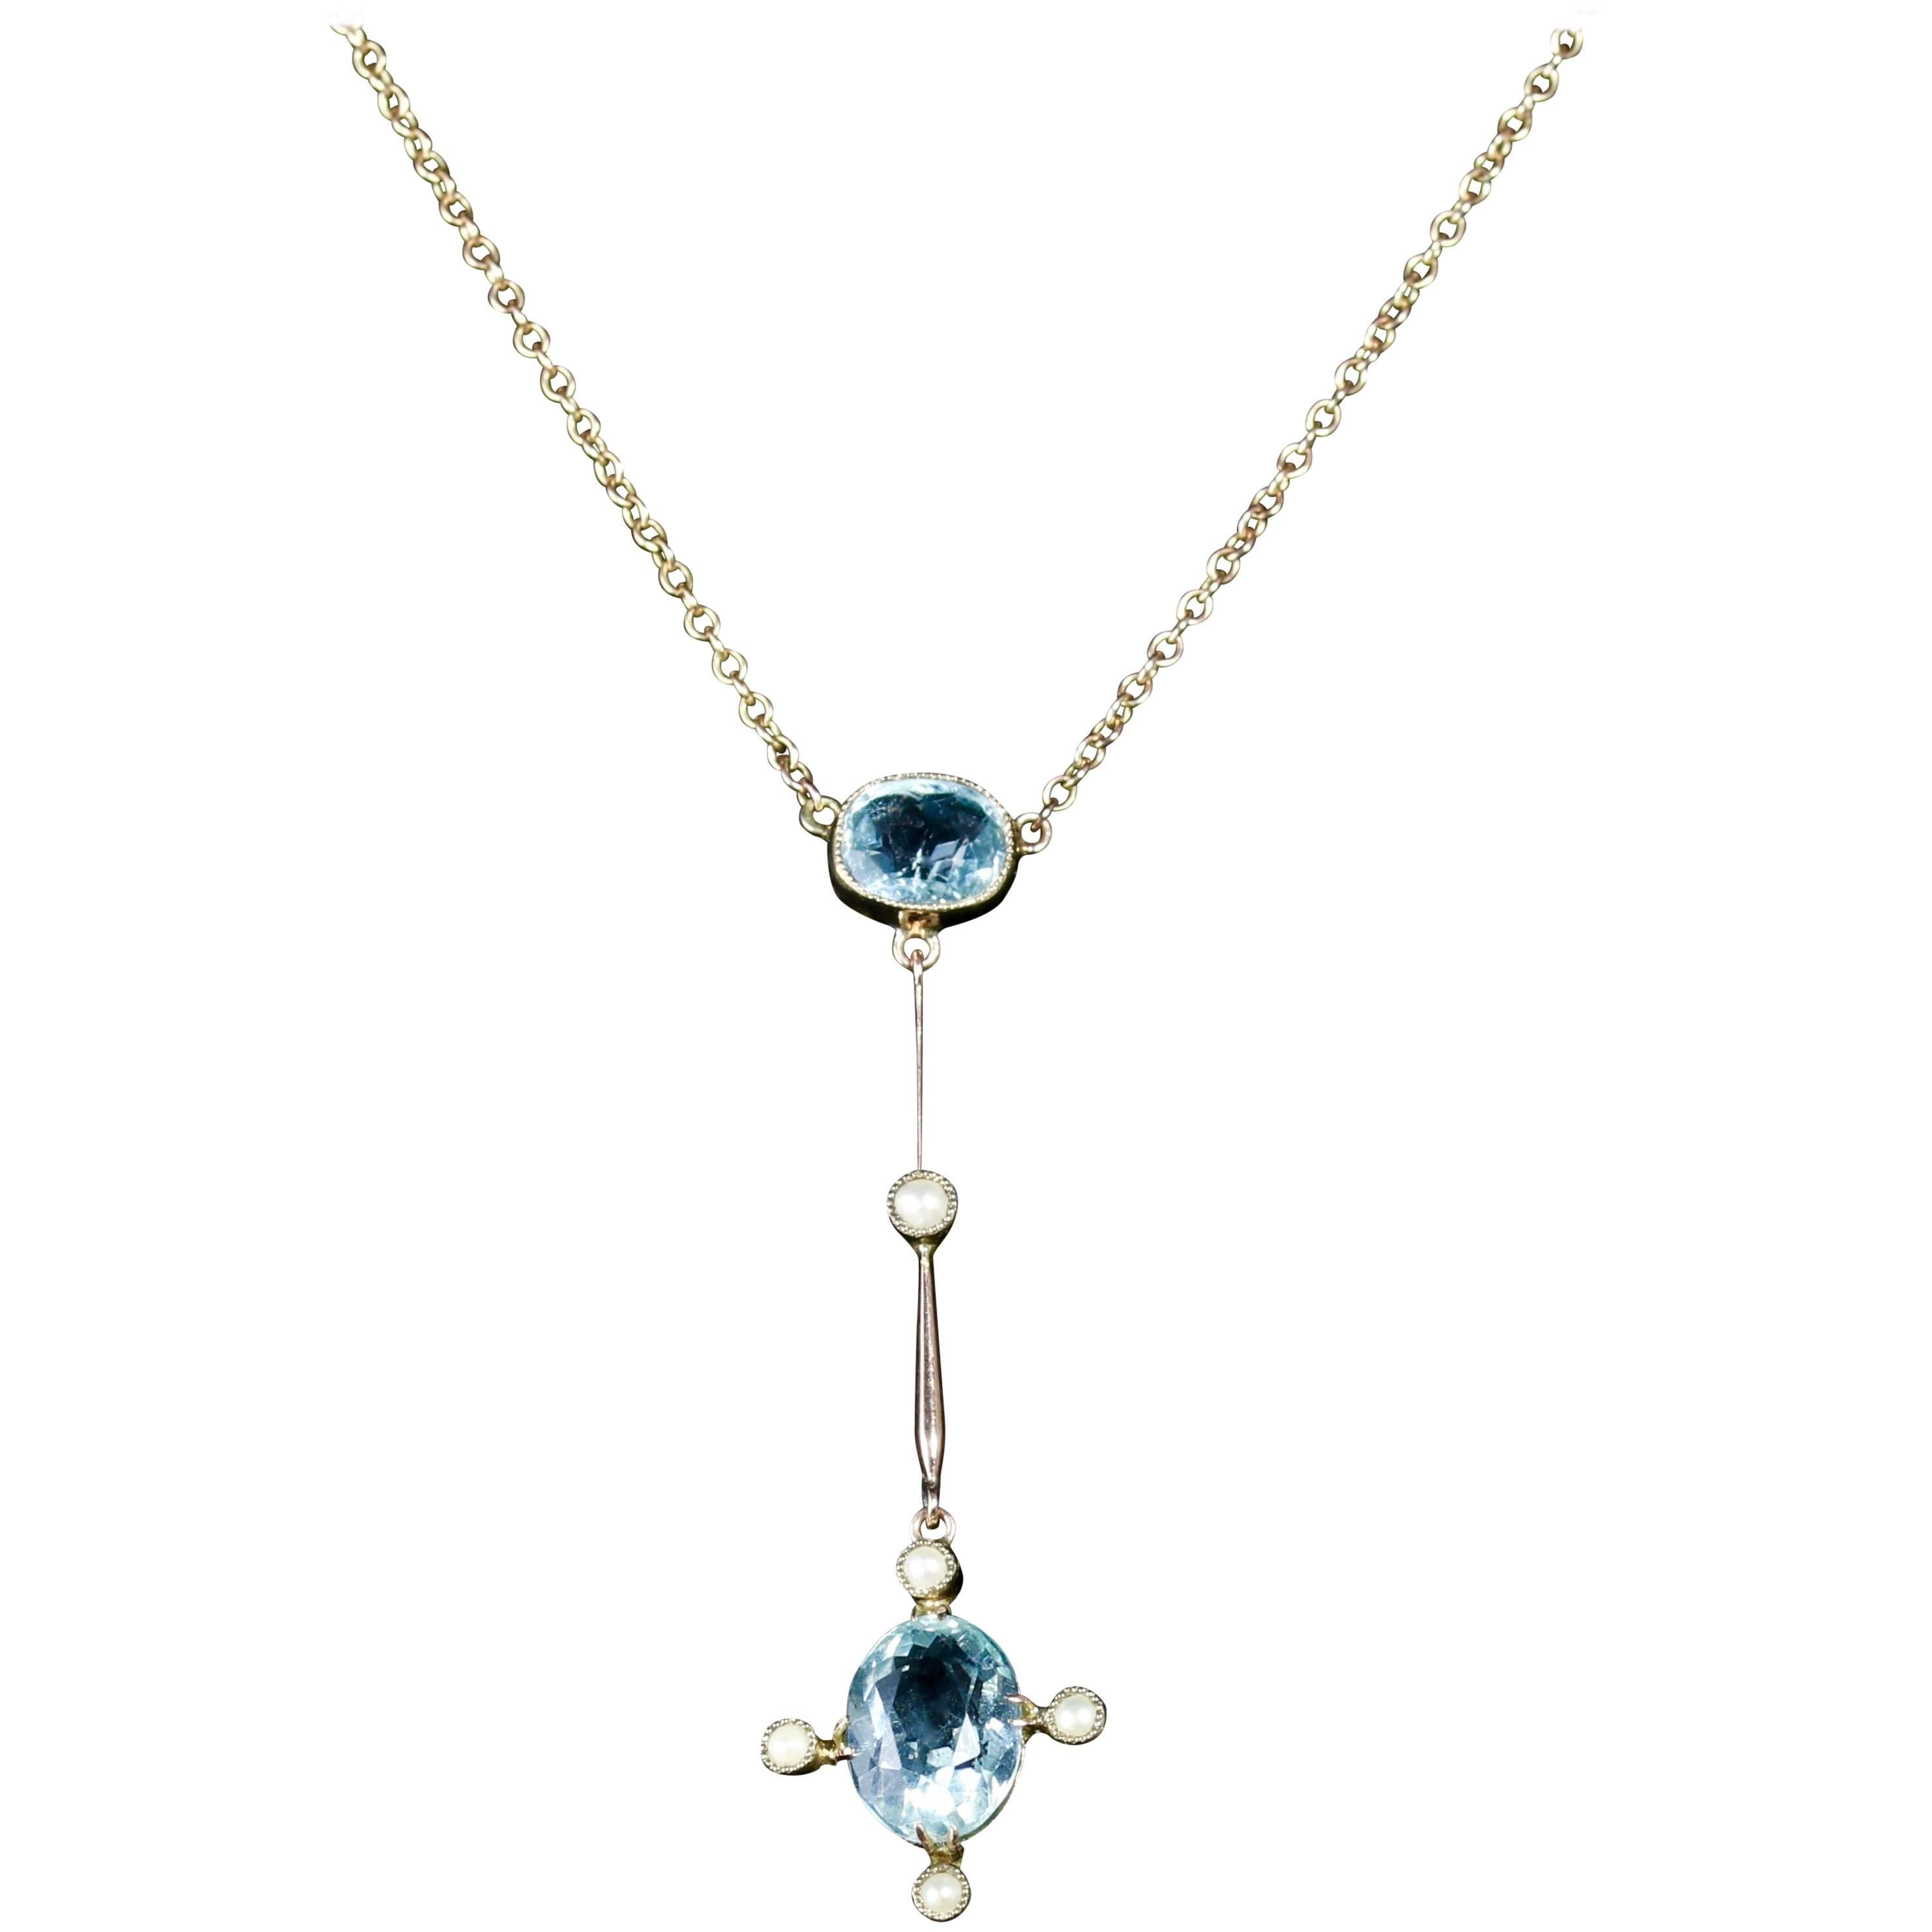 Antique Edwardian Aquamarine Pearl Necklace